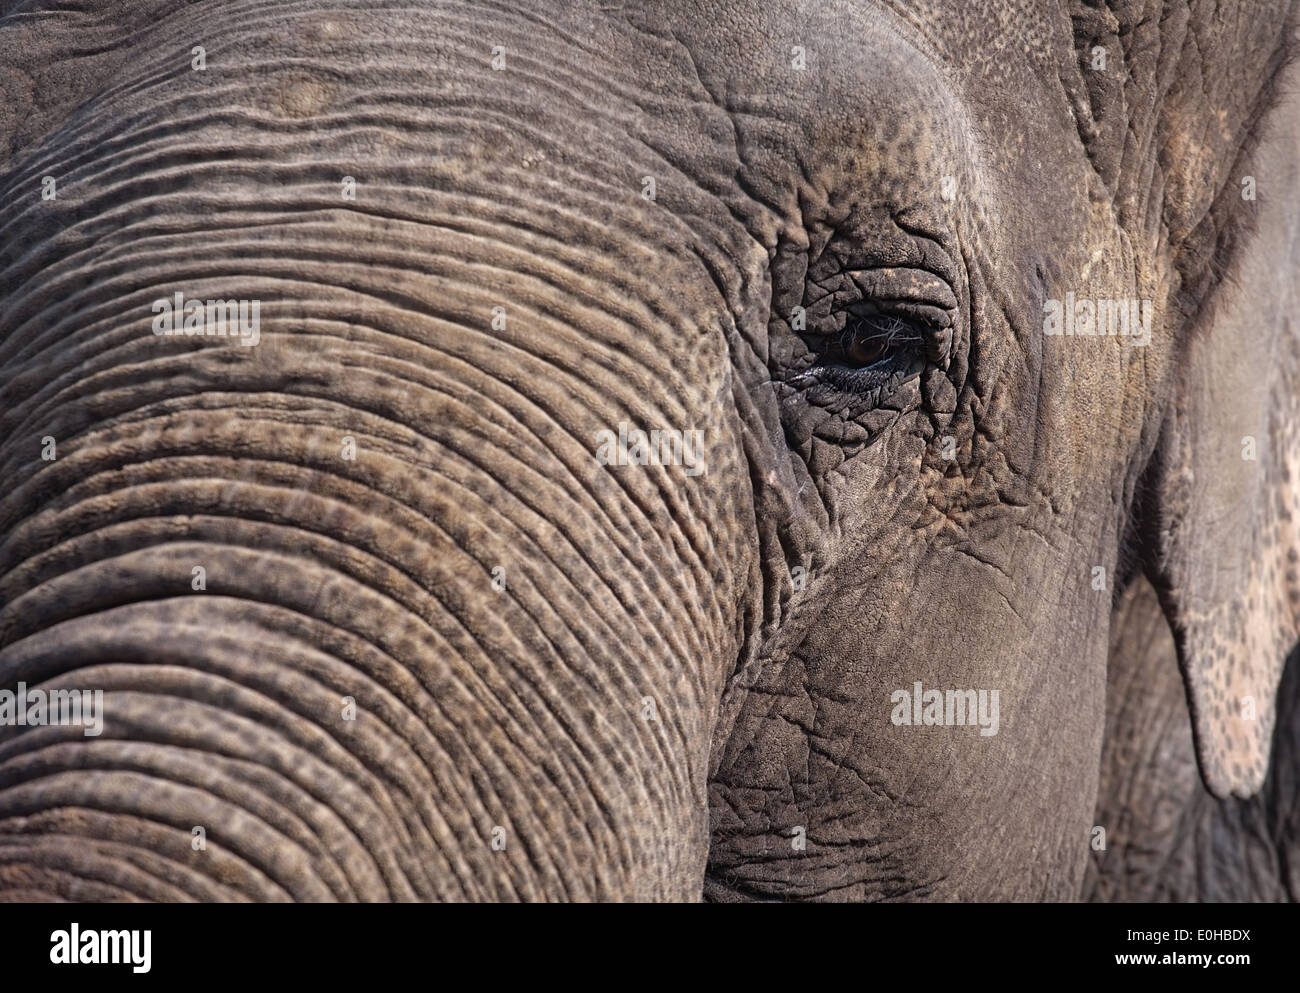 closeup portrait of elephant snout, sad eye and trunk skin details Stock Photo